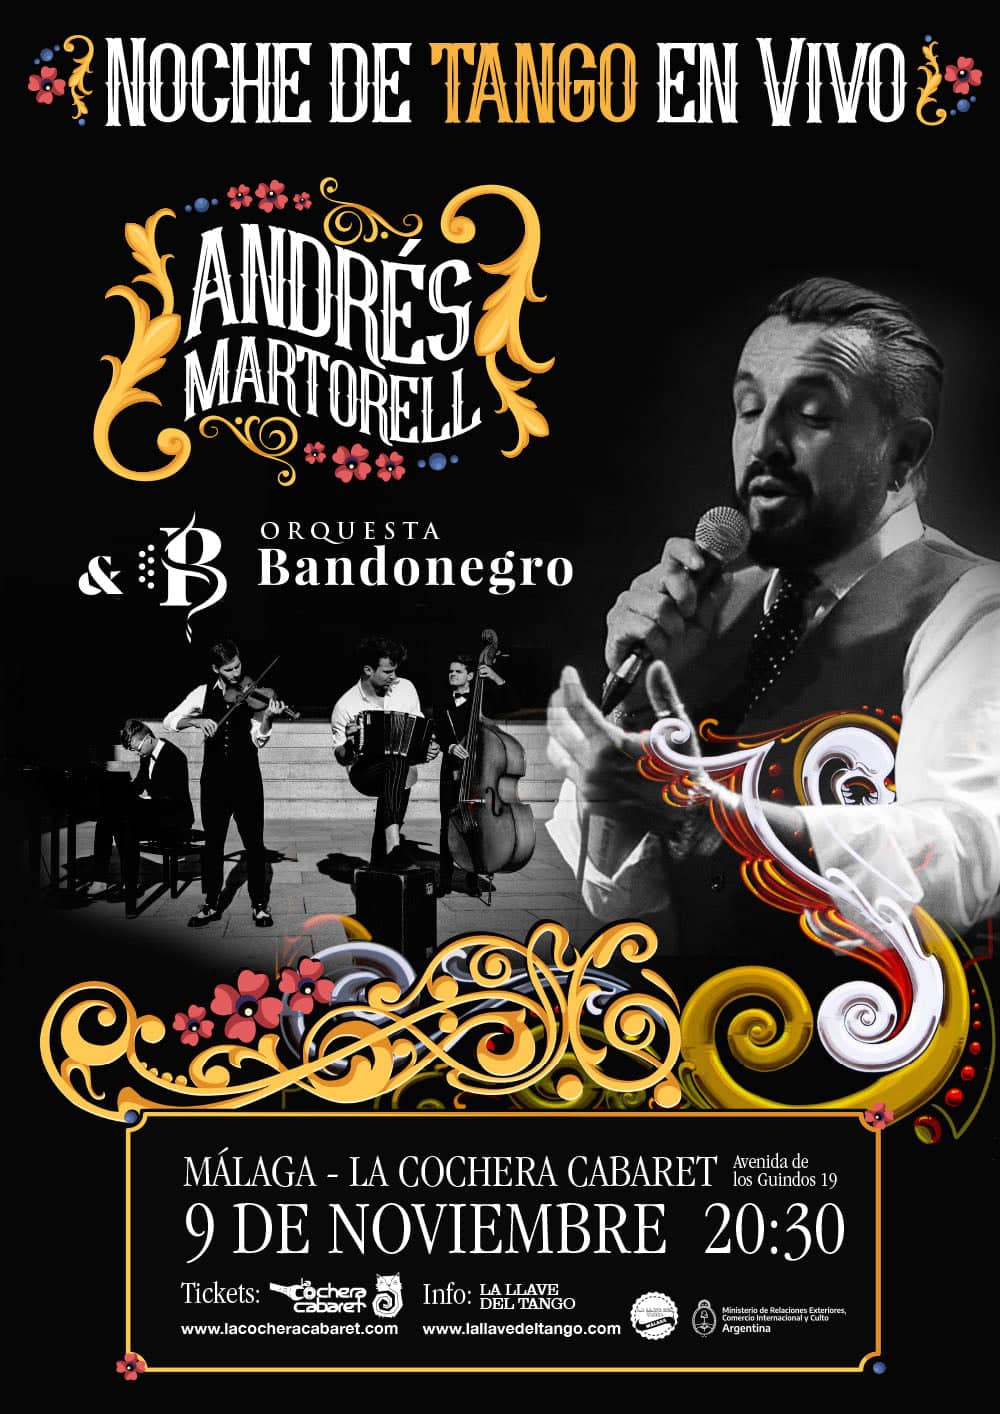 La Cochera Cabaret – Bandonegro & Andres Martorell